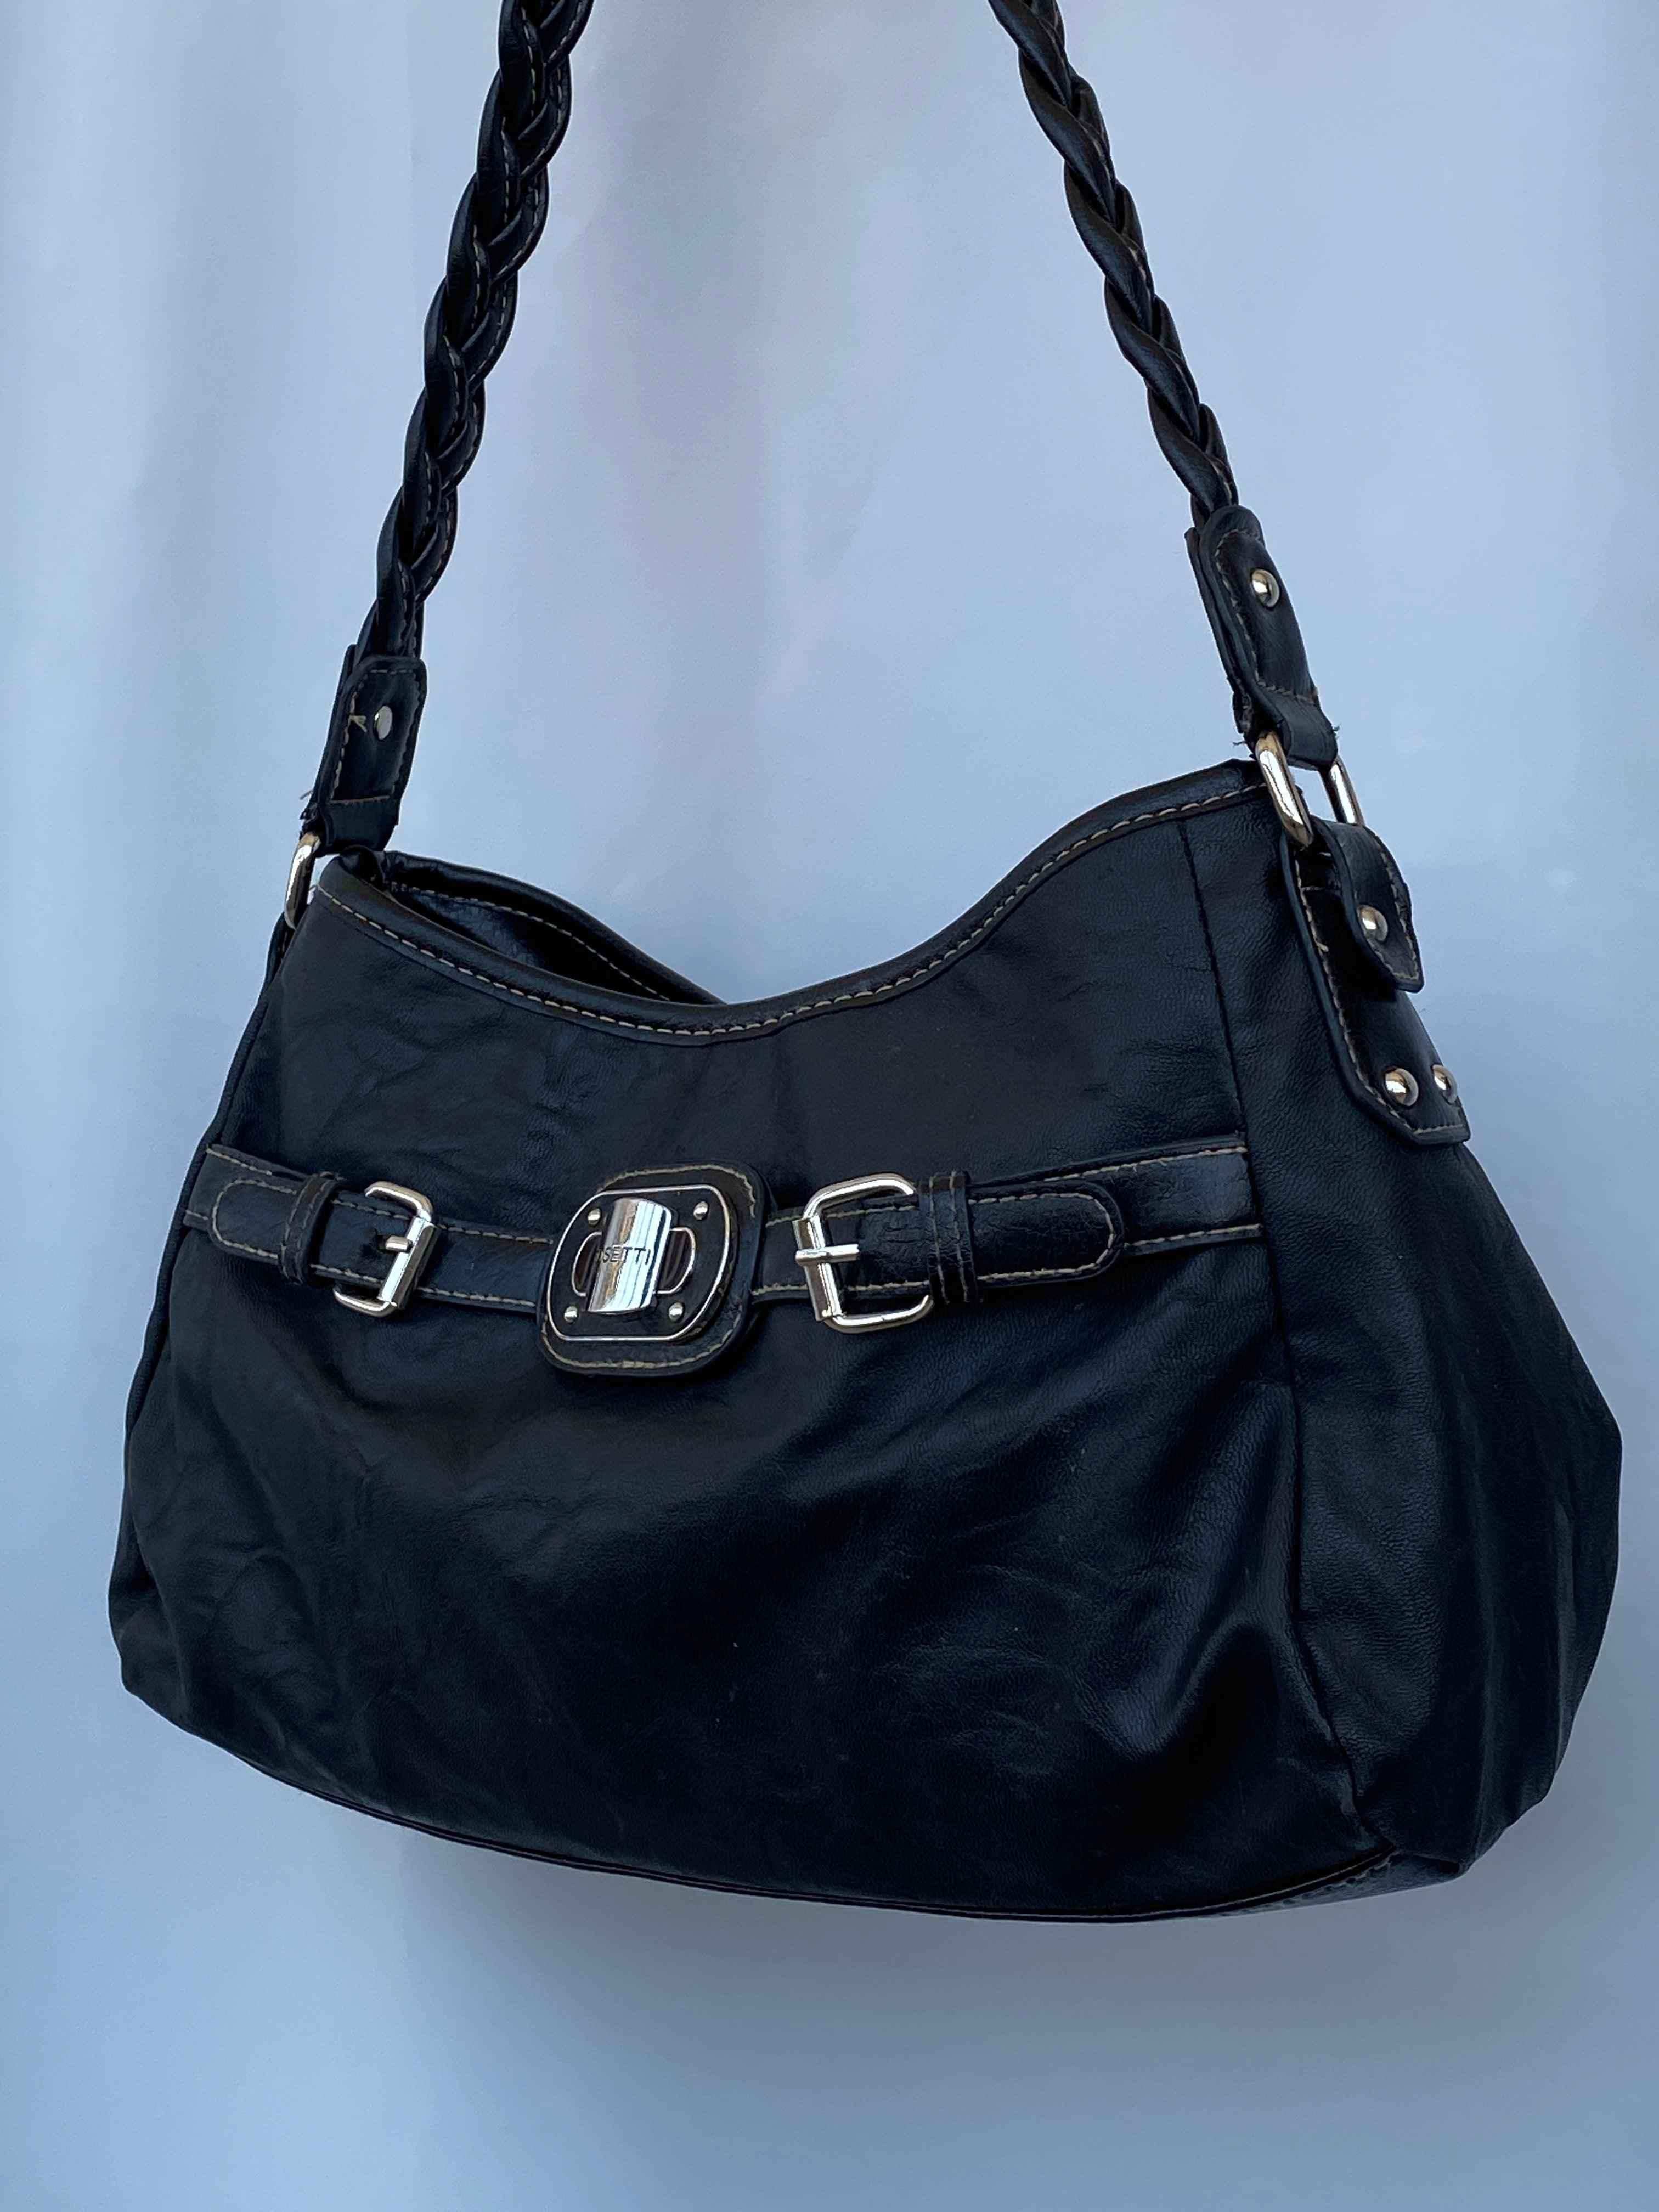 WOVEN PURSE Handbag/purse/shoulder bag Brand:... - Depop